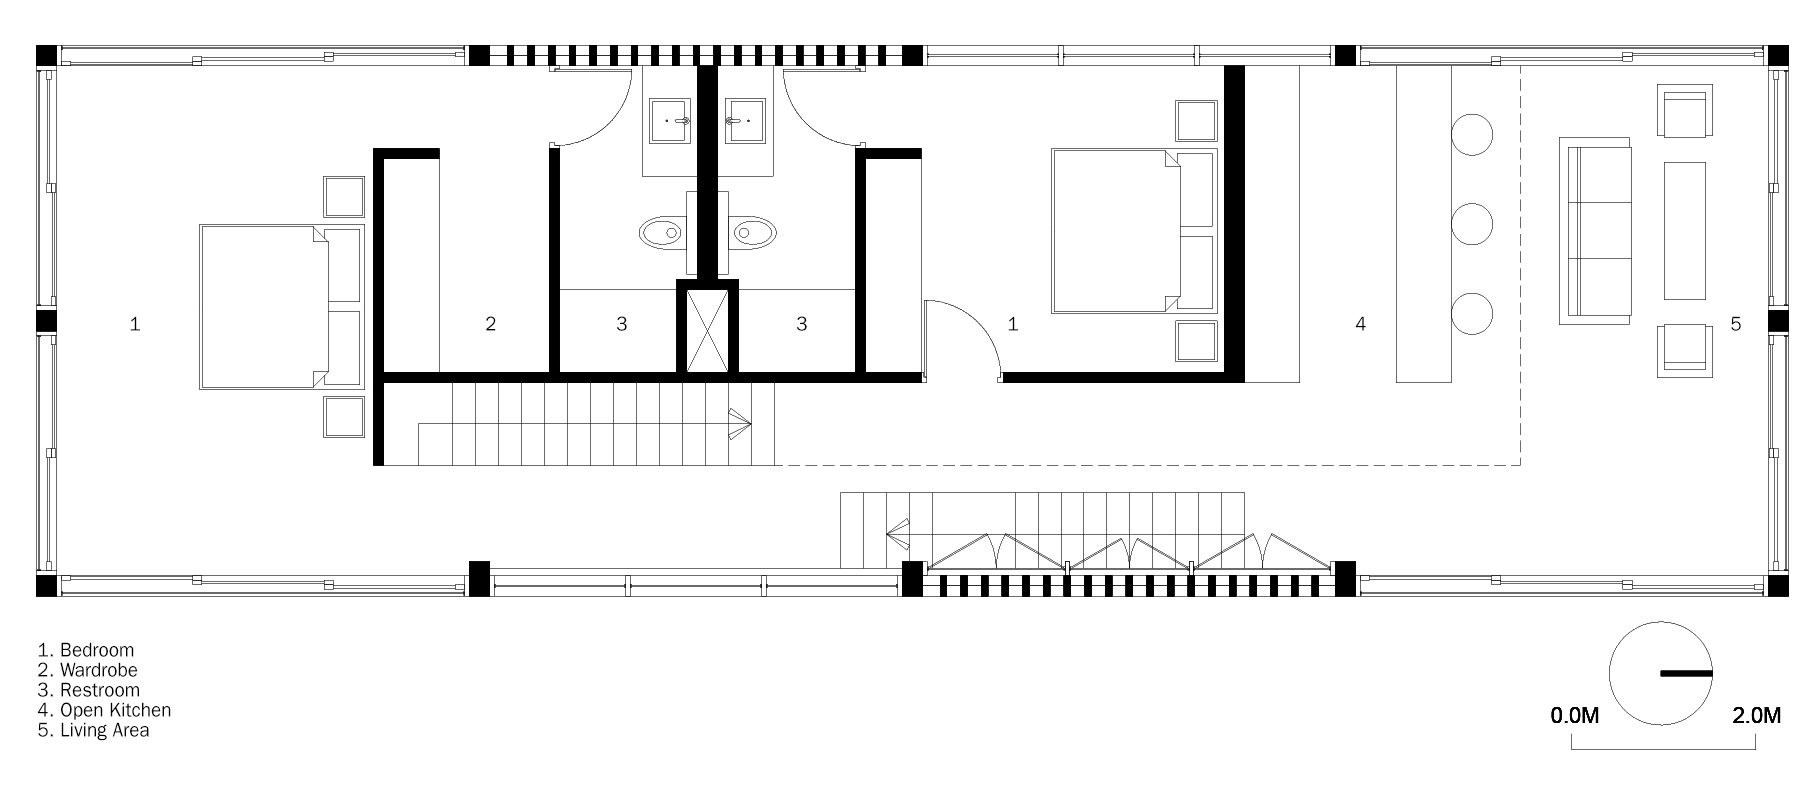 12-1654776107-Ground Floor plan.jpg